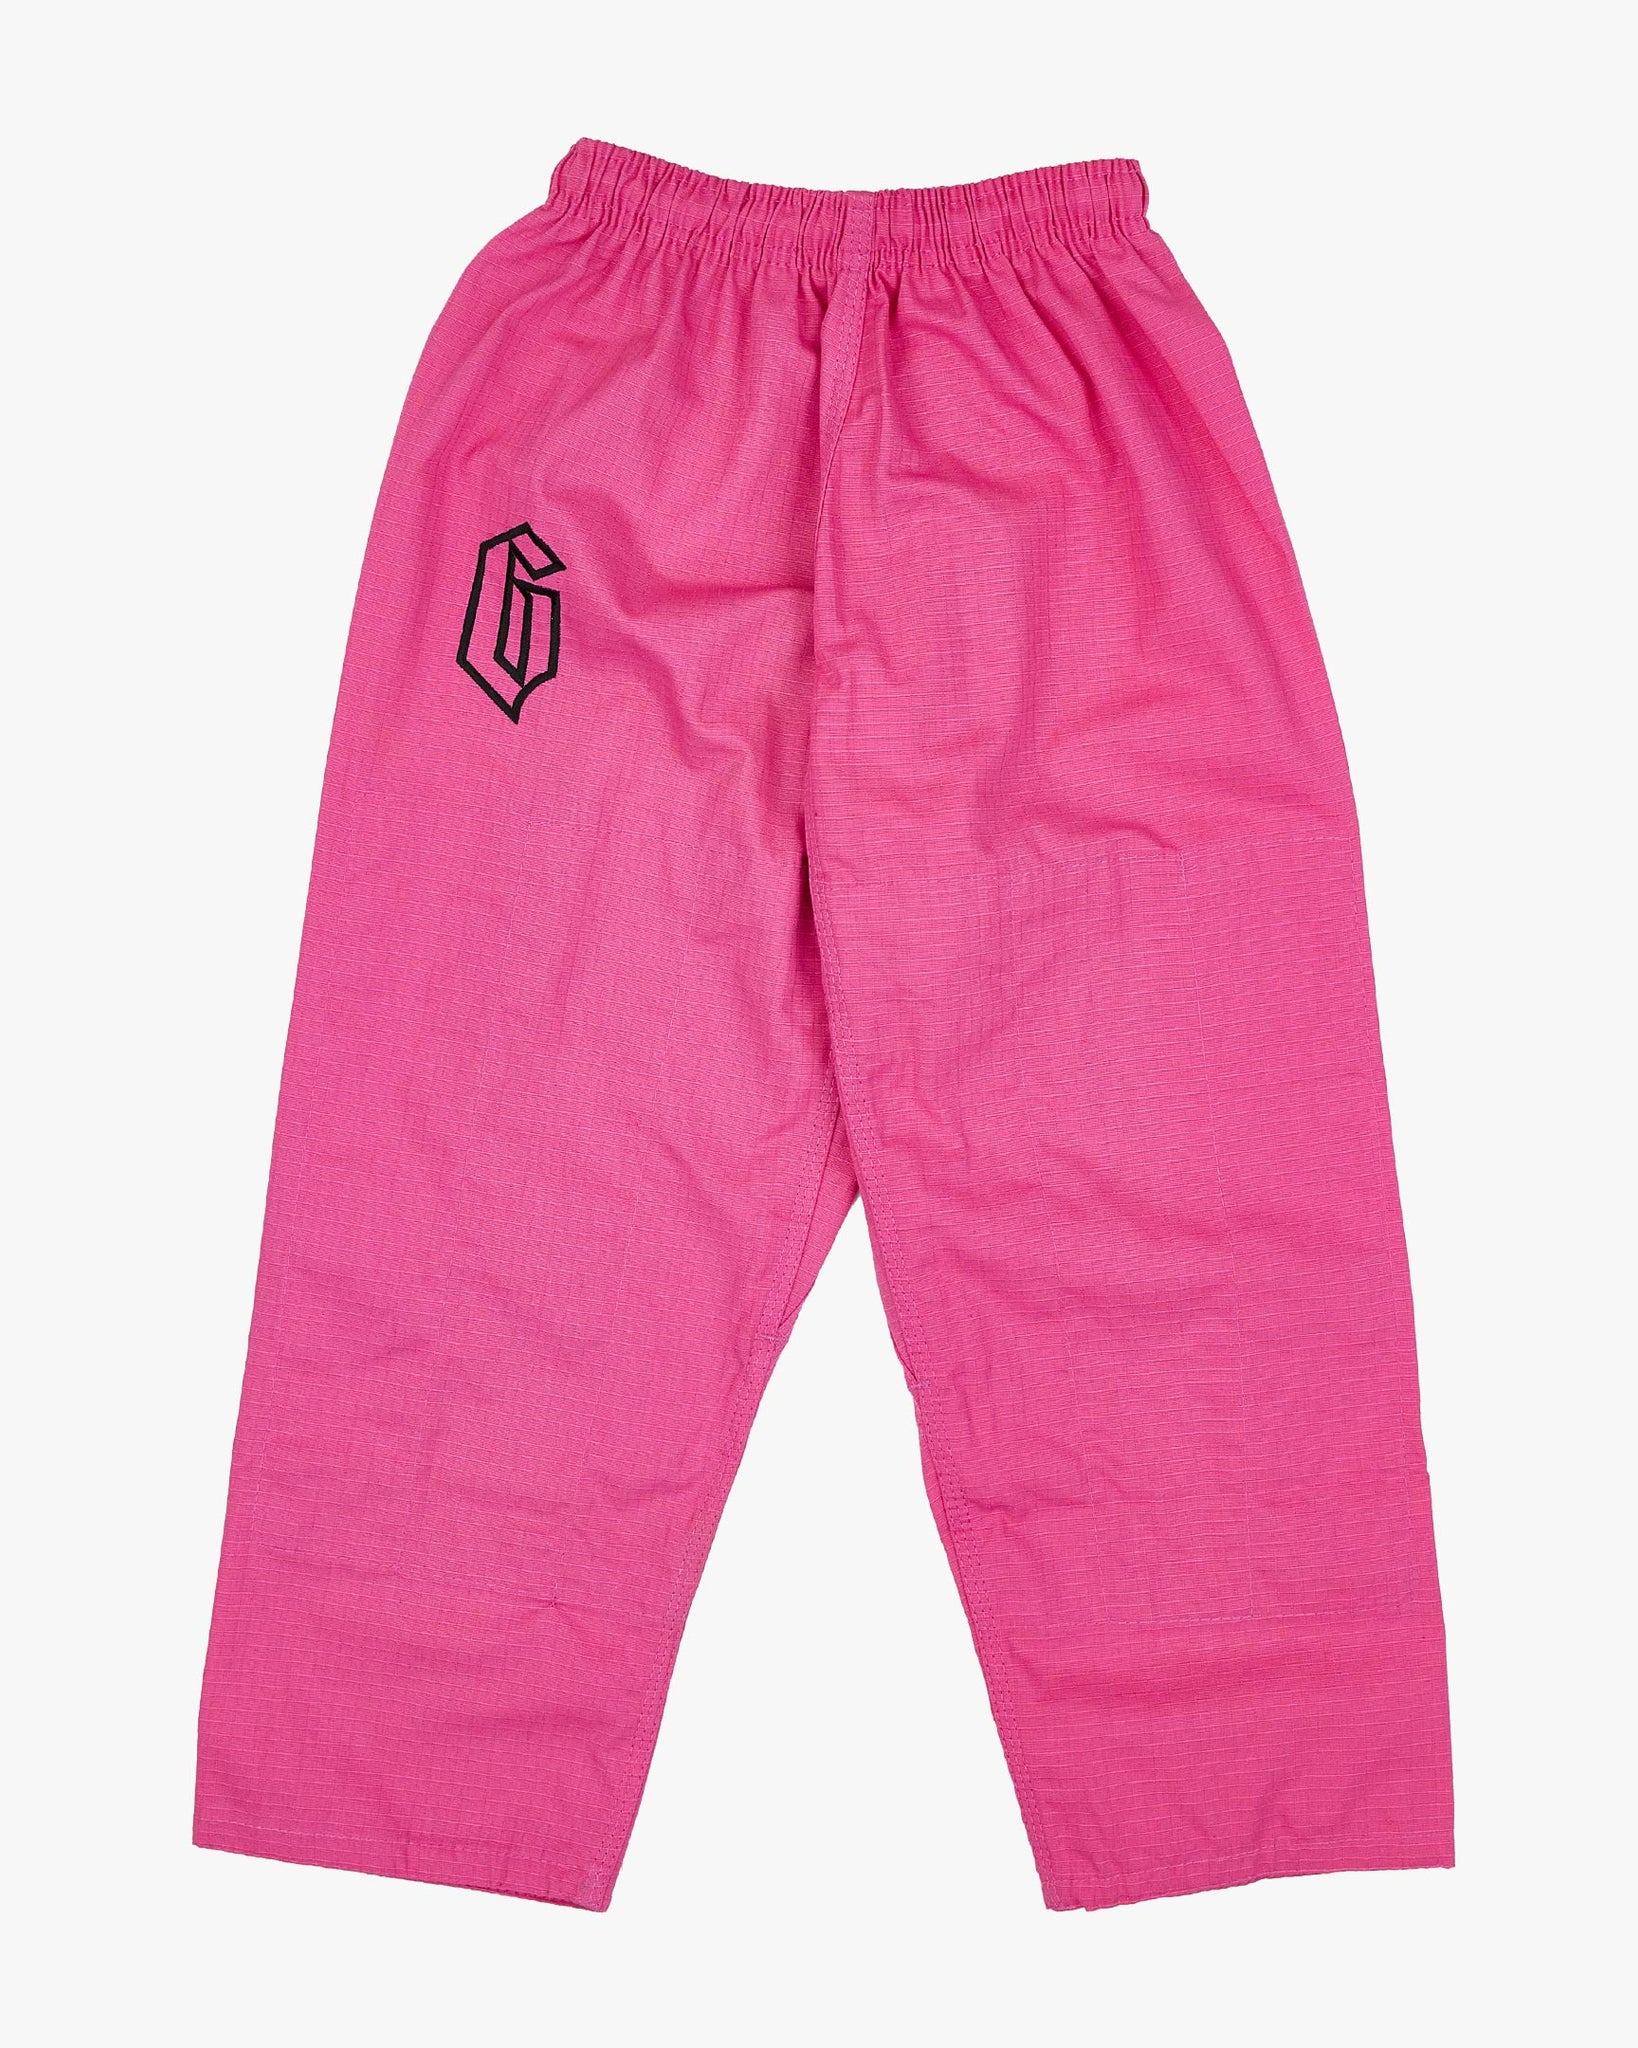 Gameness Youth Elastic Gi Pants Pink